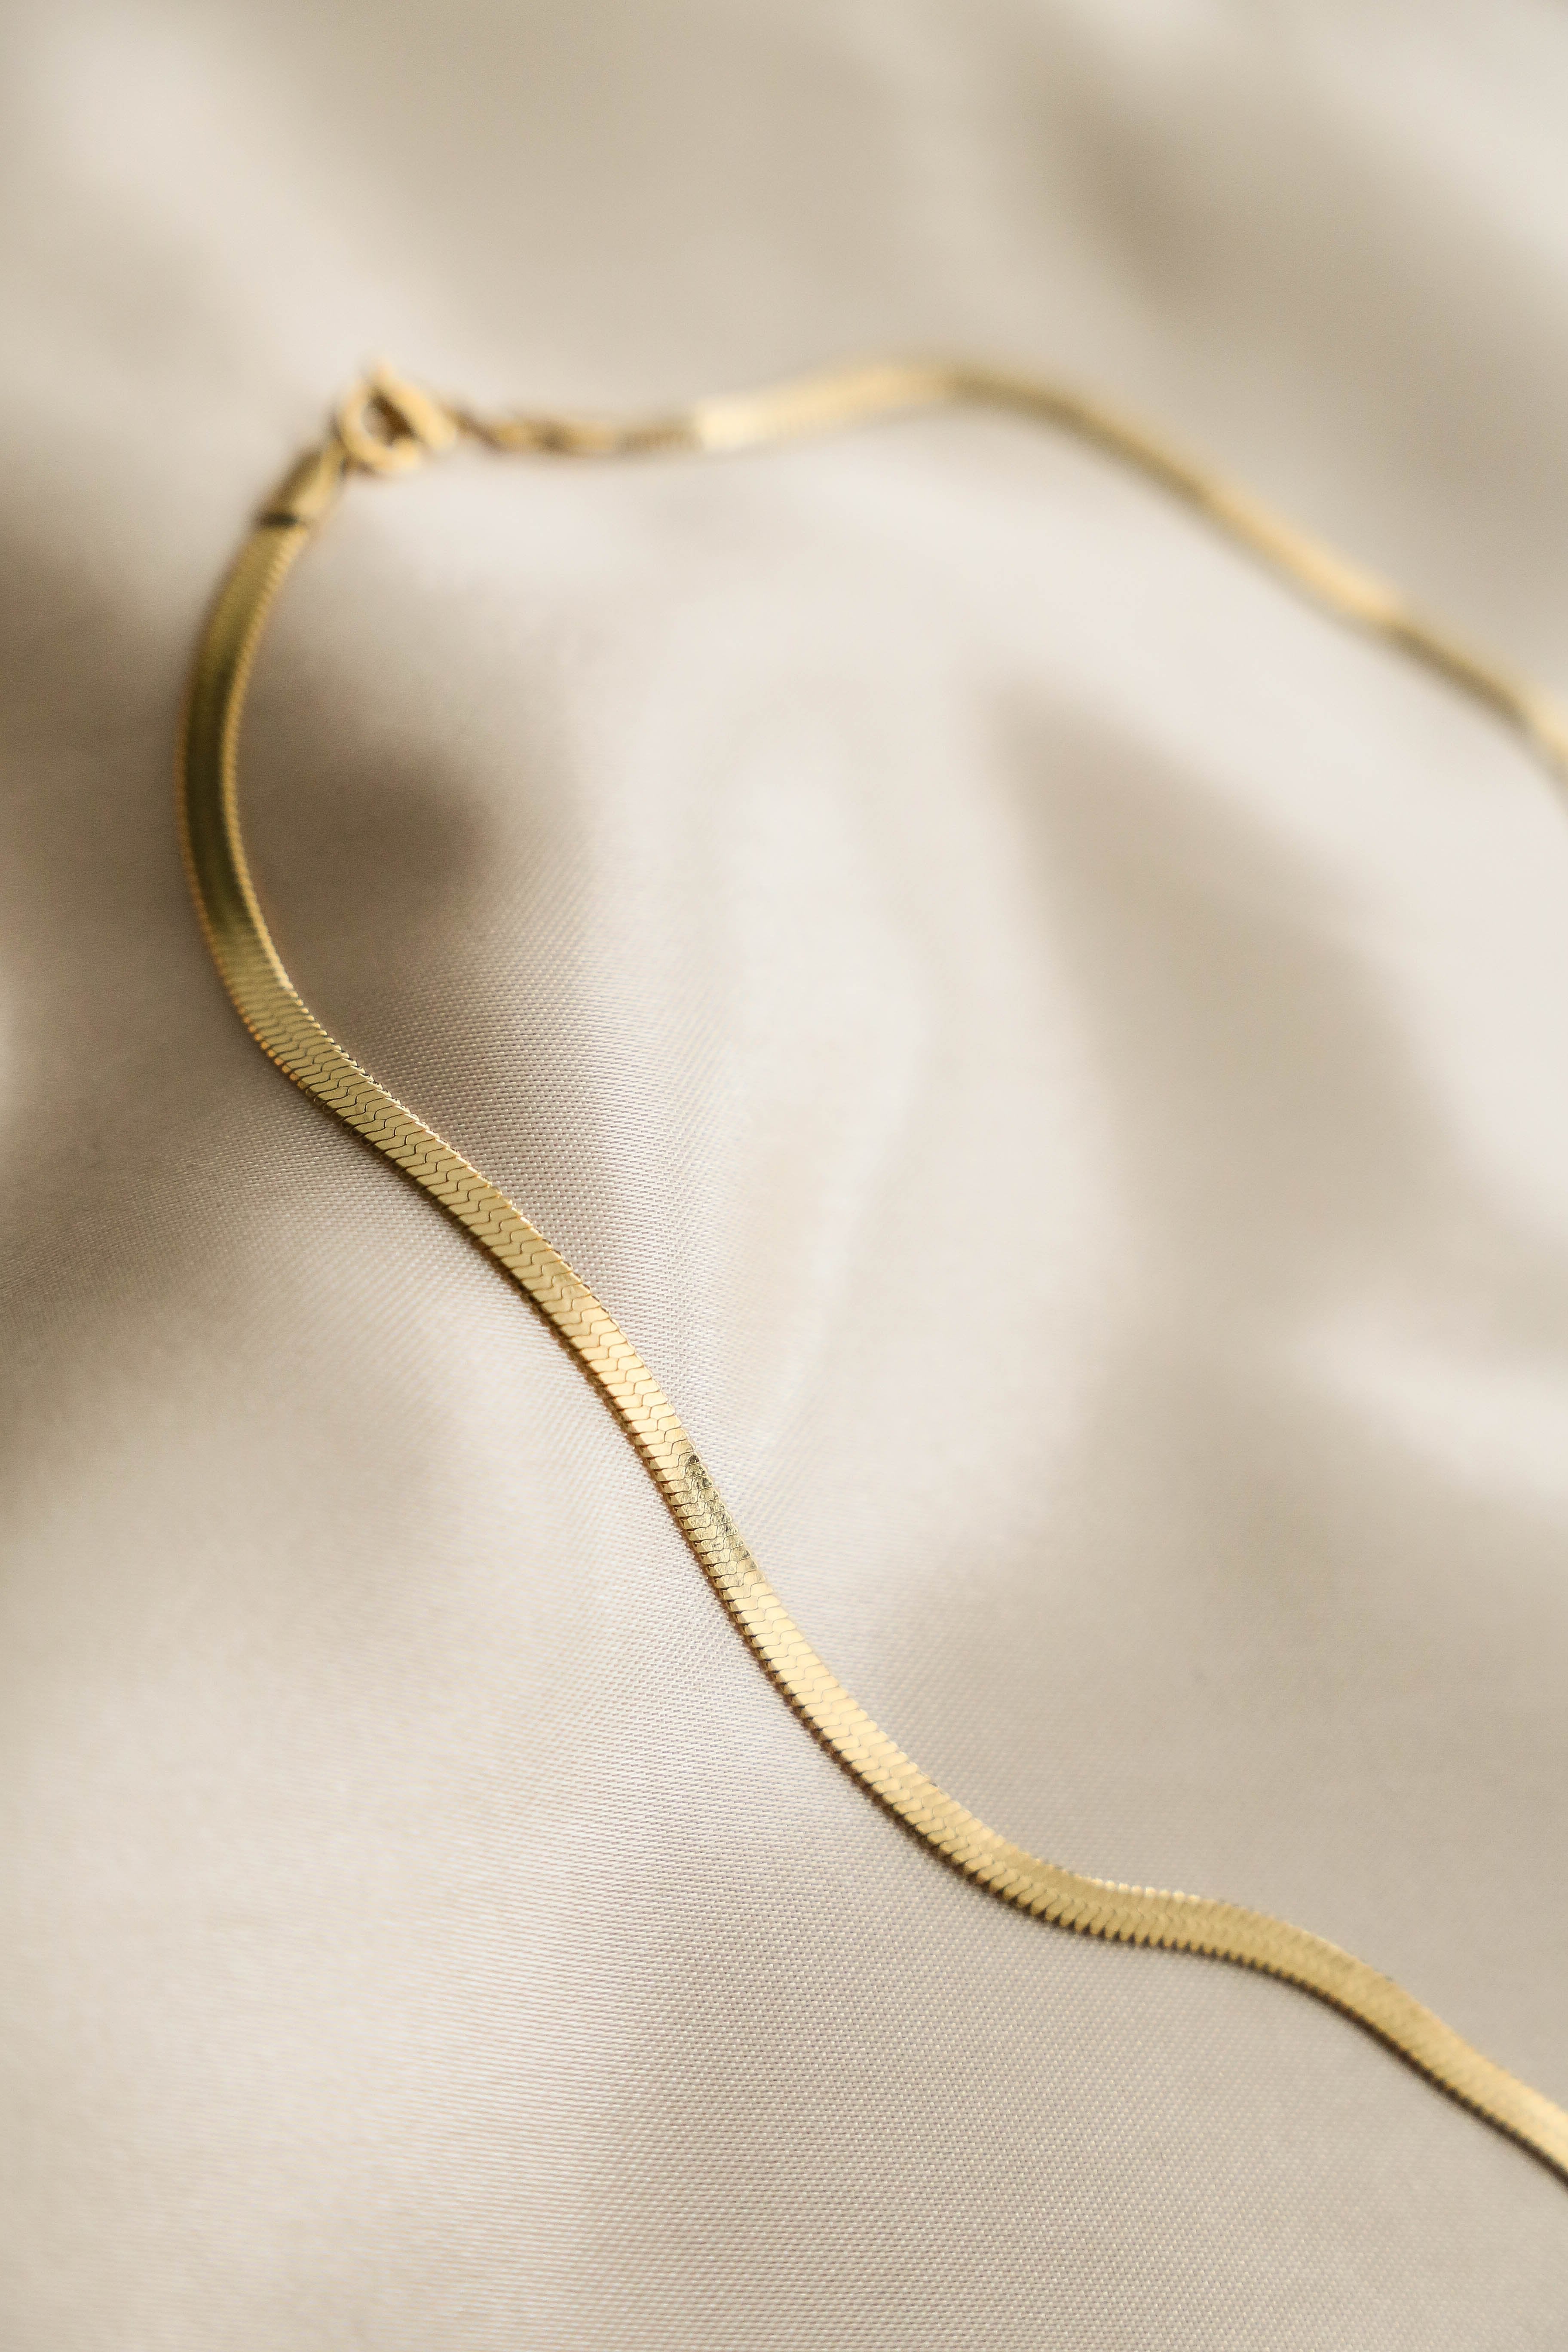 Harper Herringbone Necklace - Boutique Minimaliste has waterproof, durable, elegant and vintage inspired jewelry